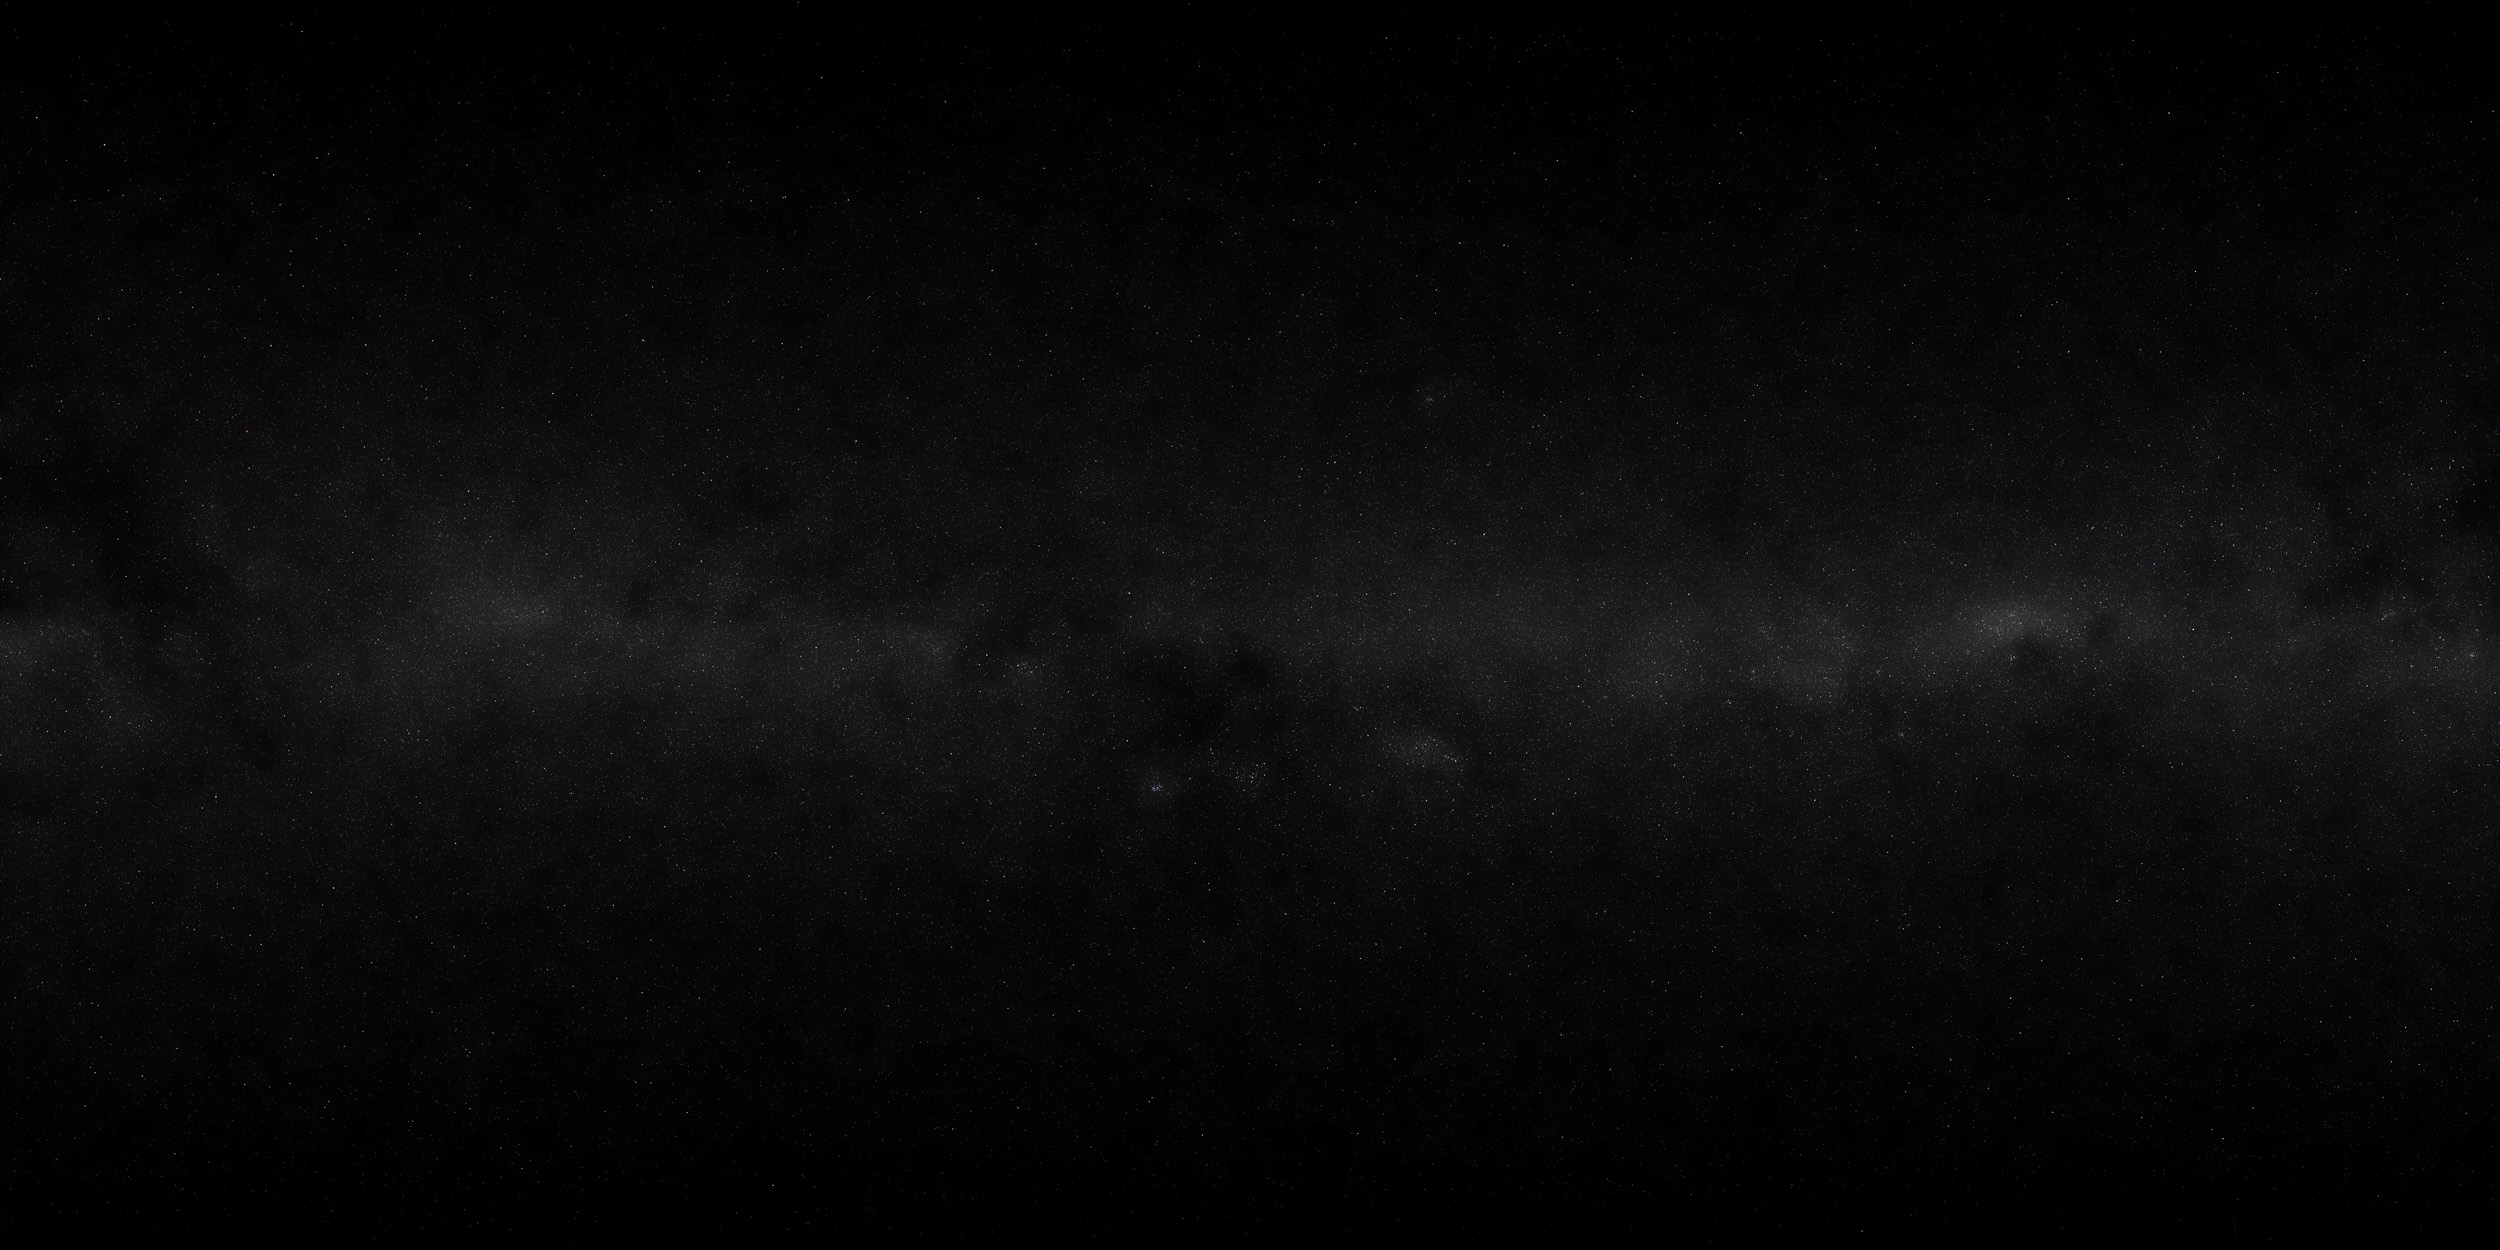 outer space, monochrome - desktop wallpaper